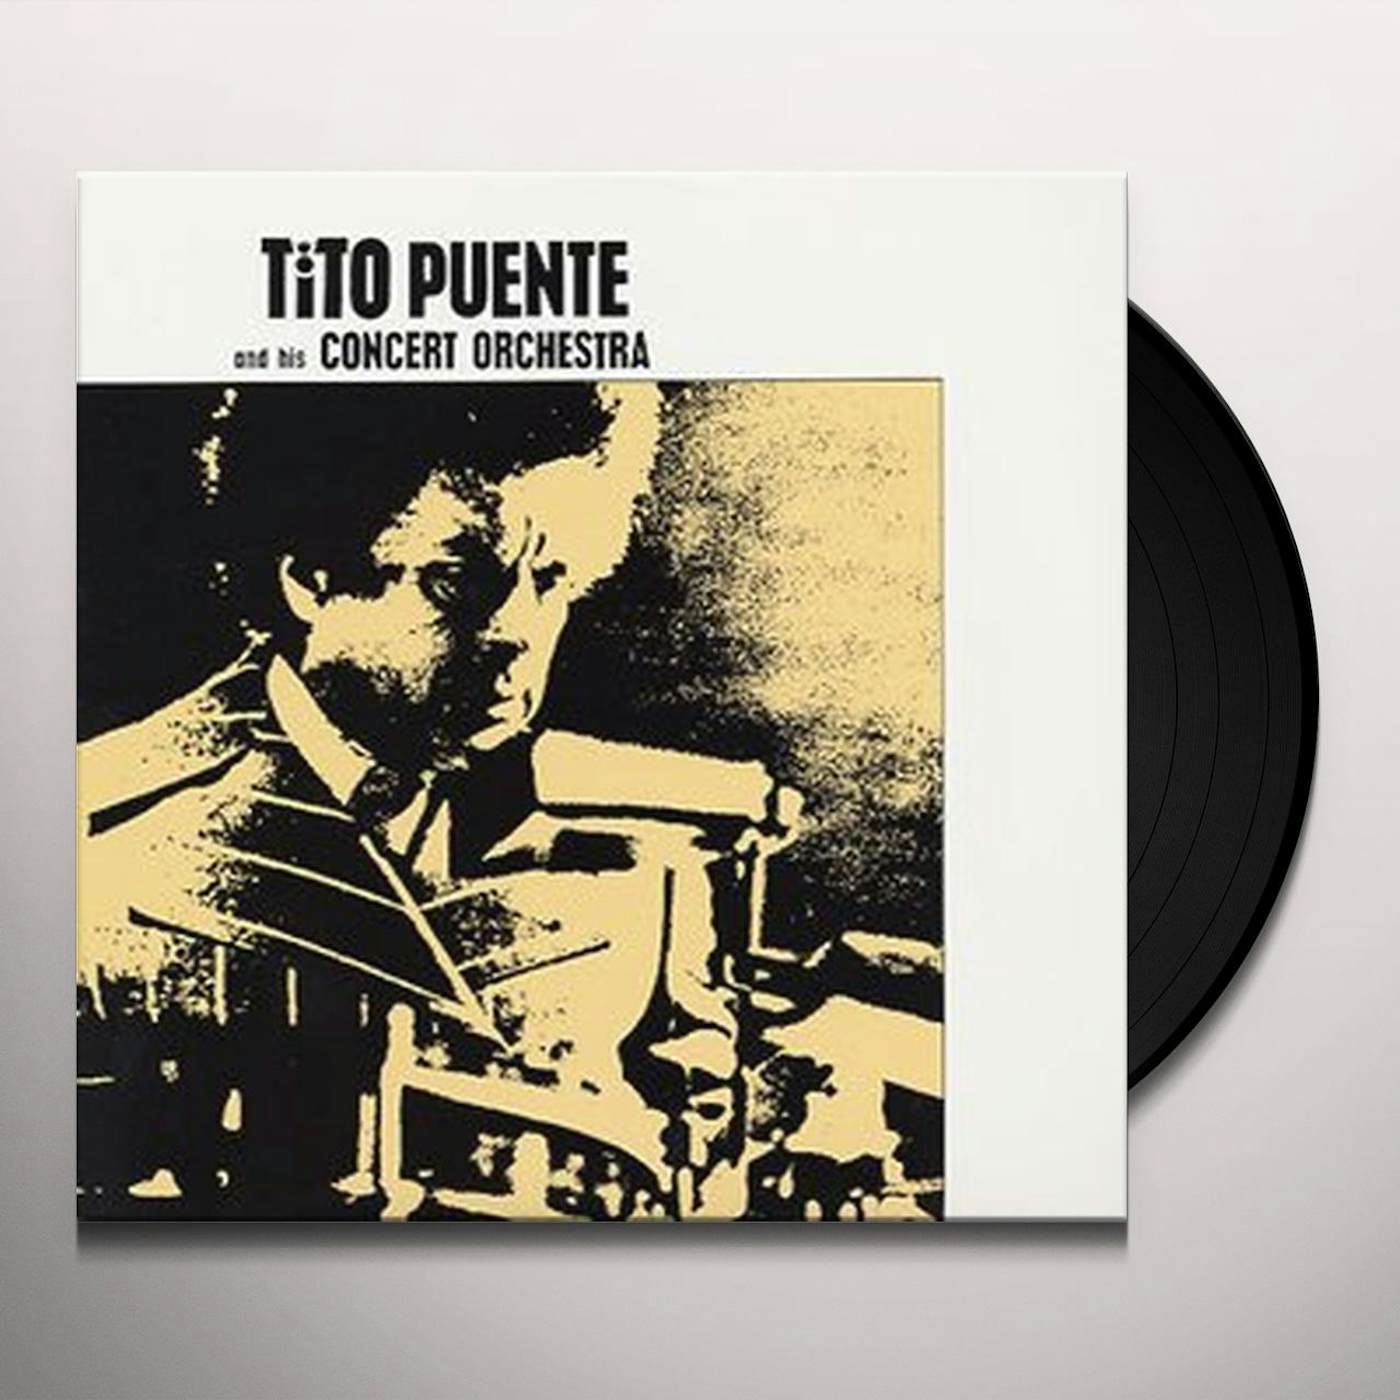 Tito Puente HIS CONCERT ORCHESTRA Vinyl Record